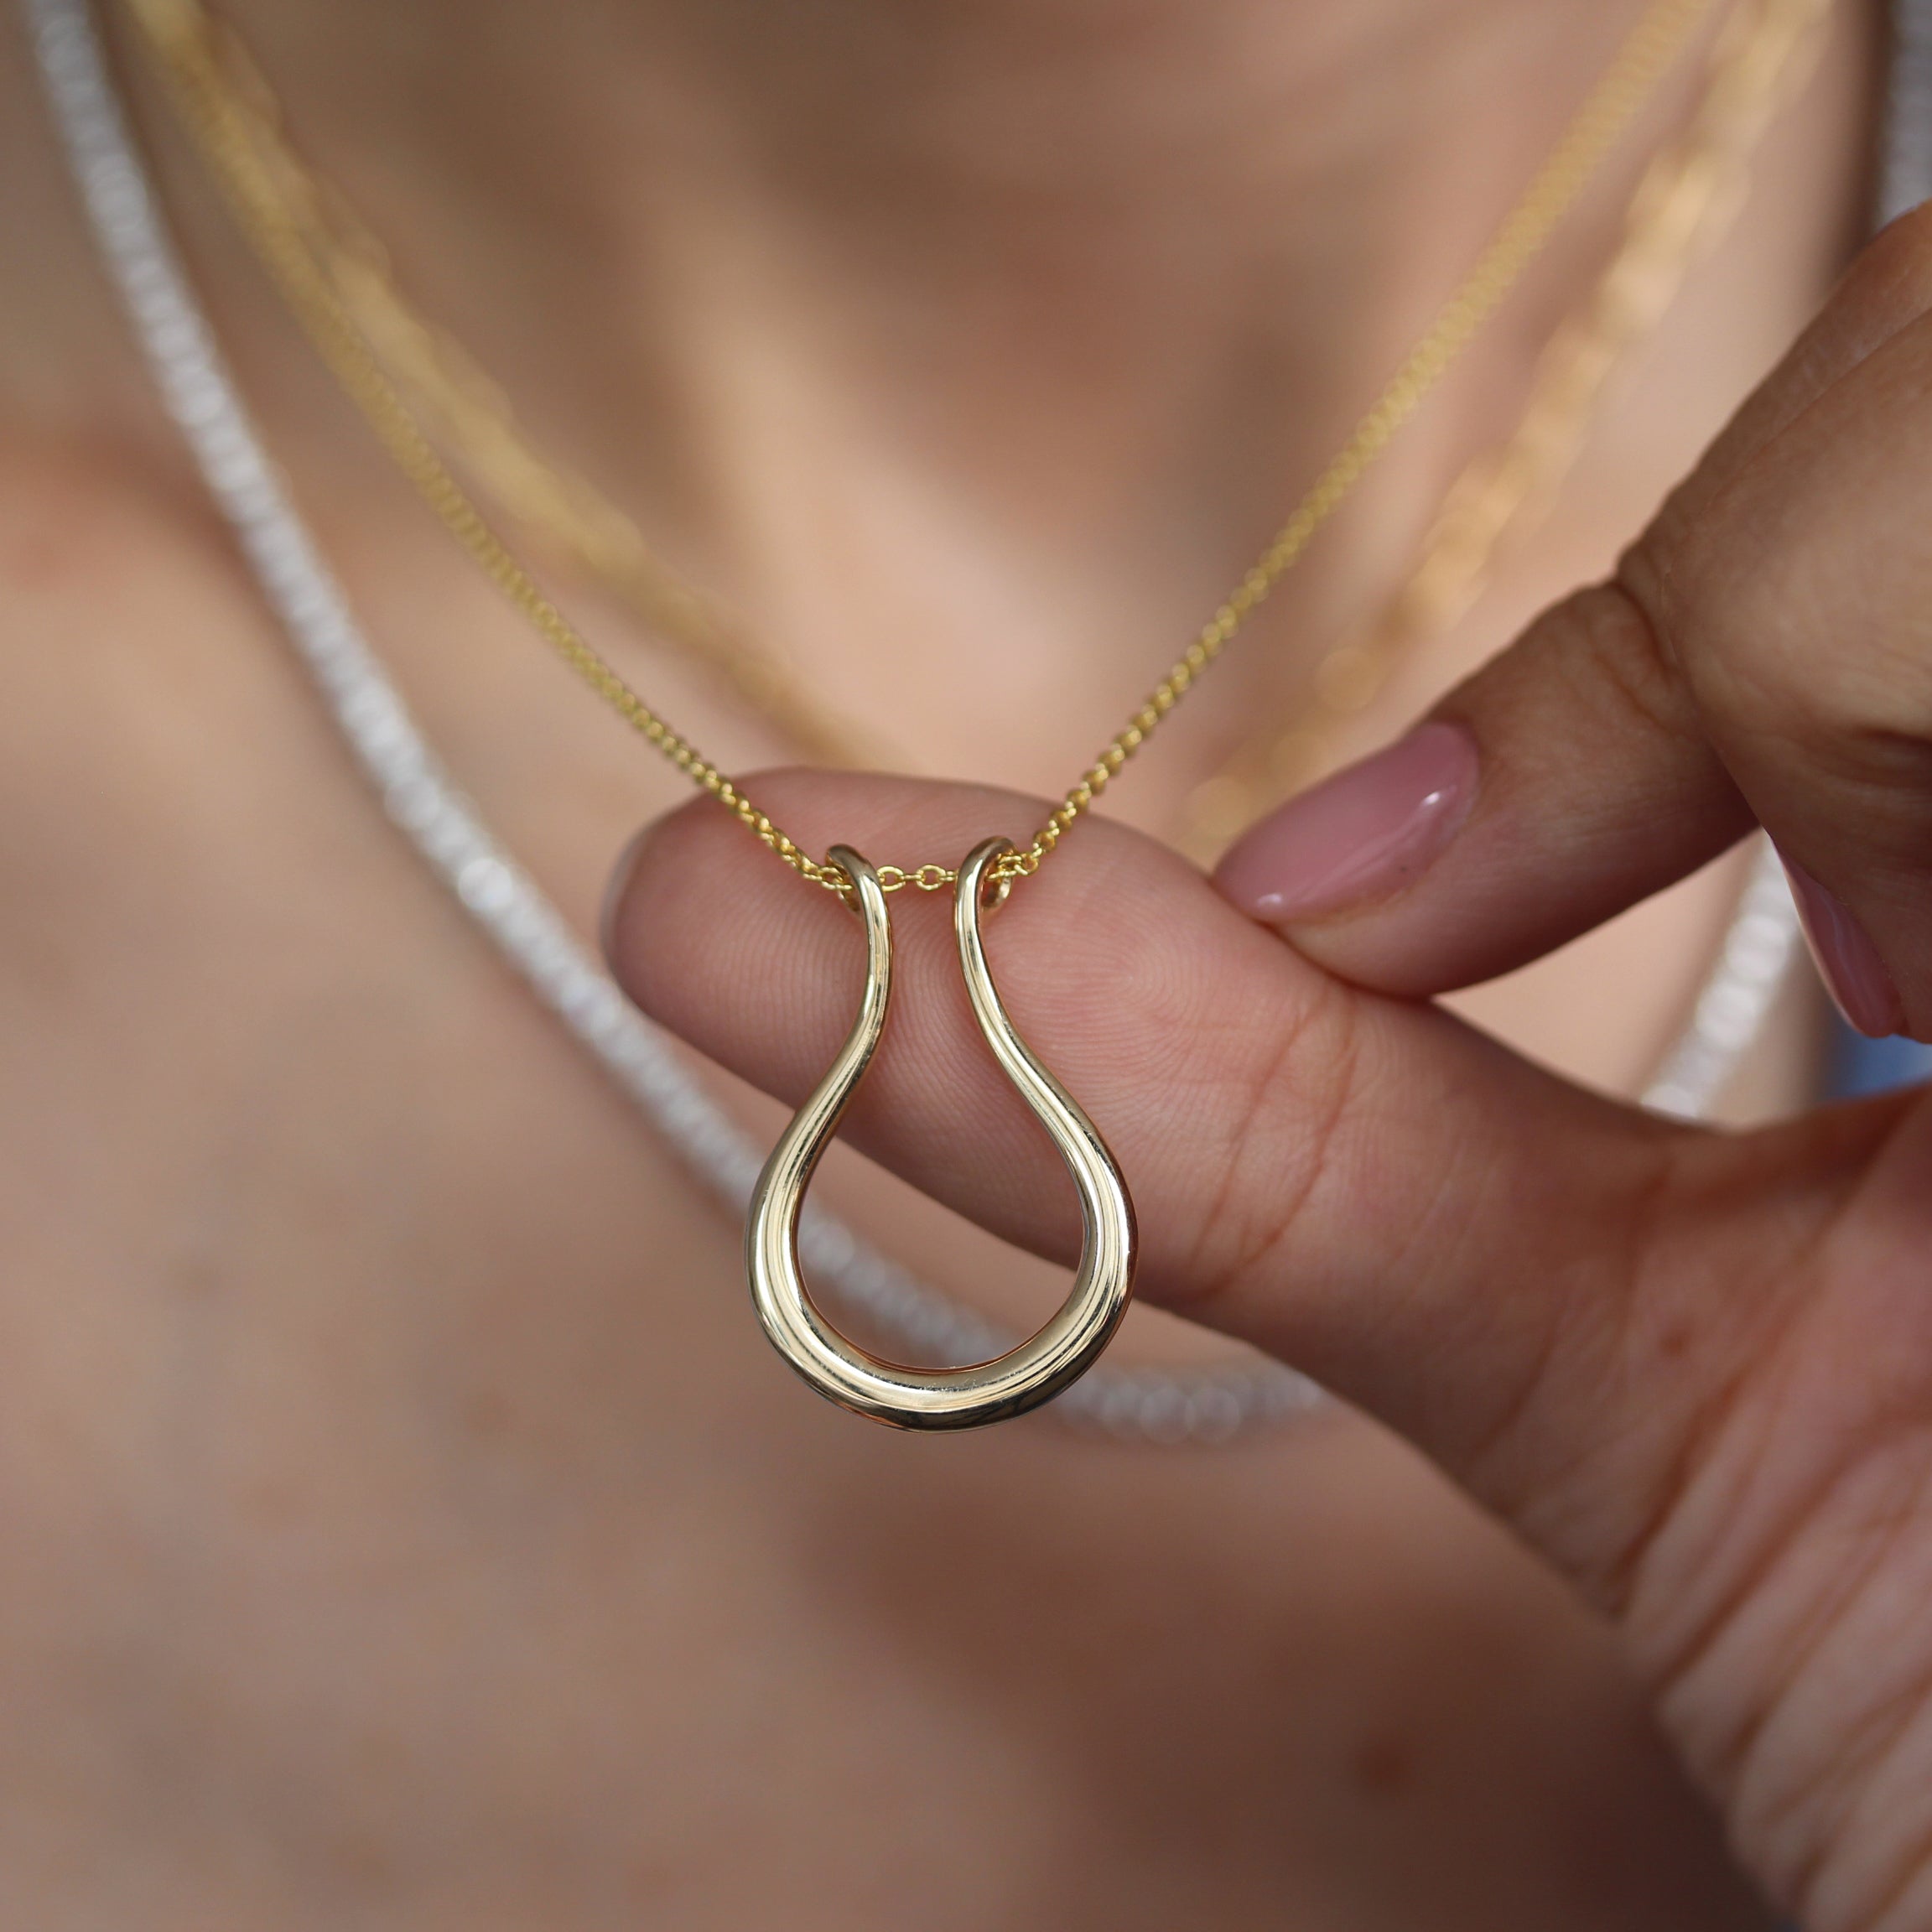 Ring Holder Gold Pendant Necklace